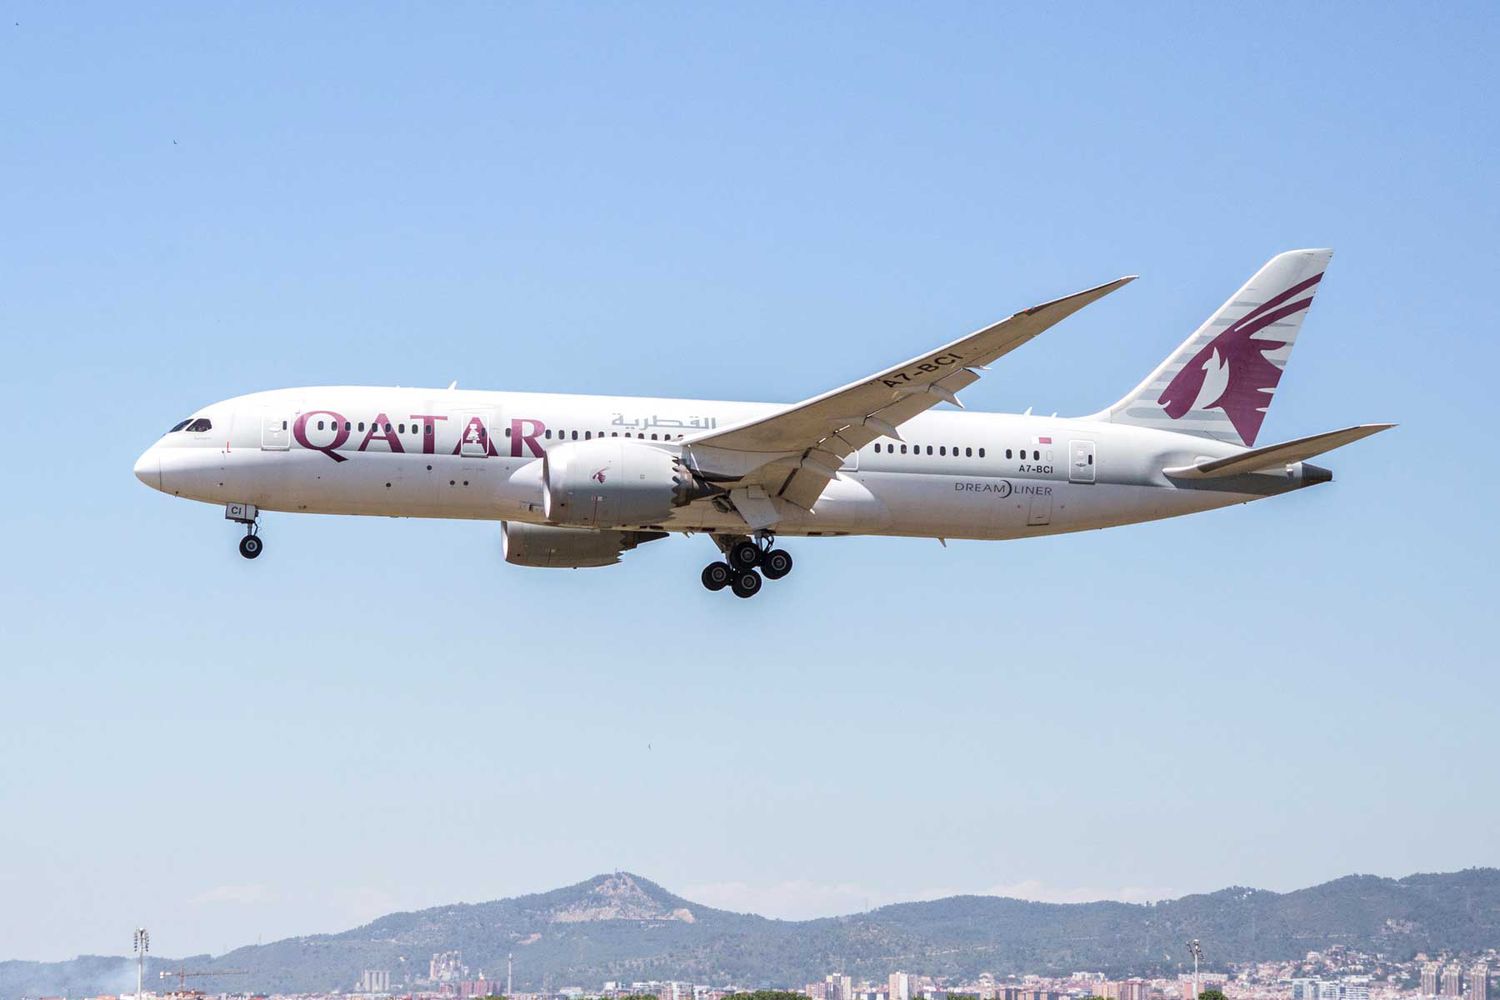 Un avion de Qatar Airlines atterrit à l'aéroport d'El Prat en Espagne